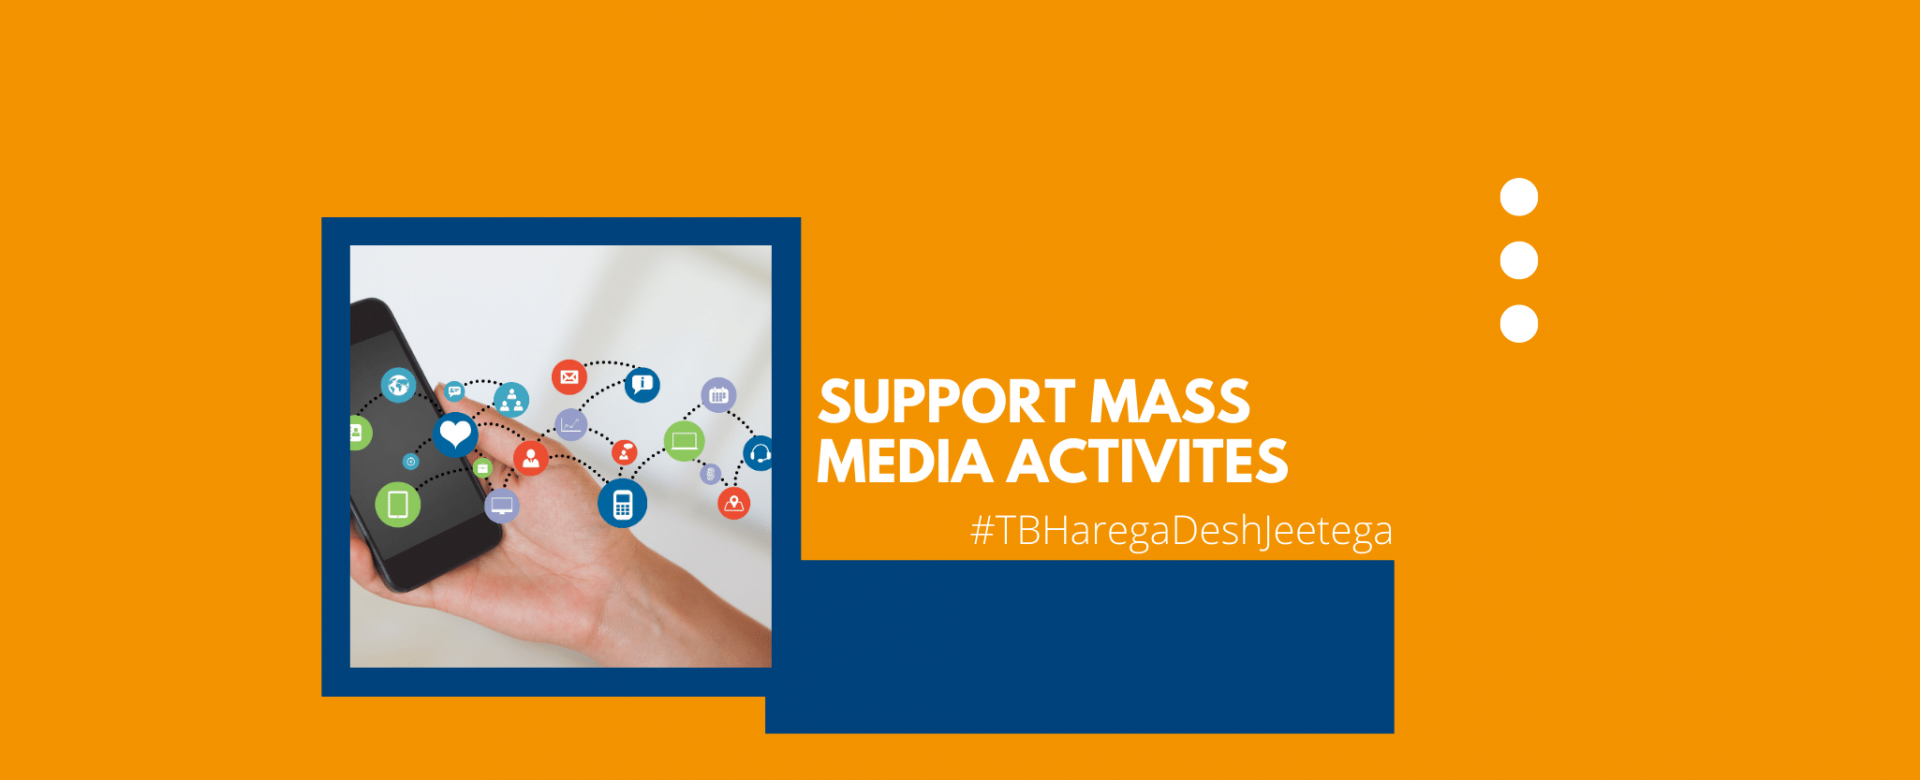 Support Mass Media Activities